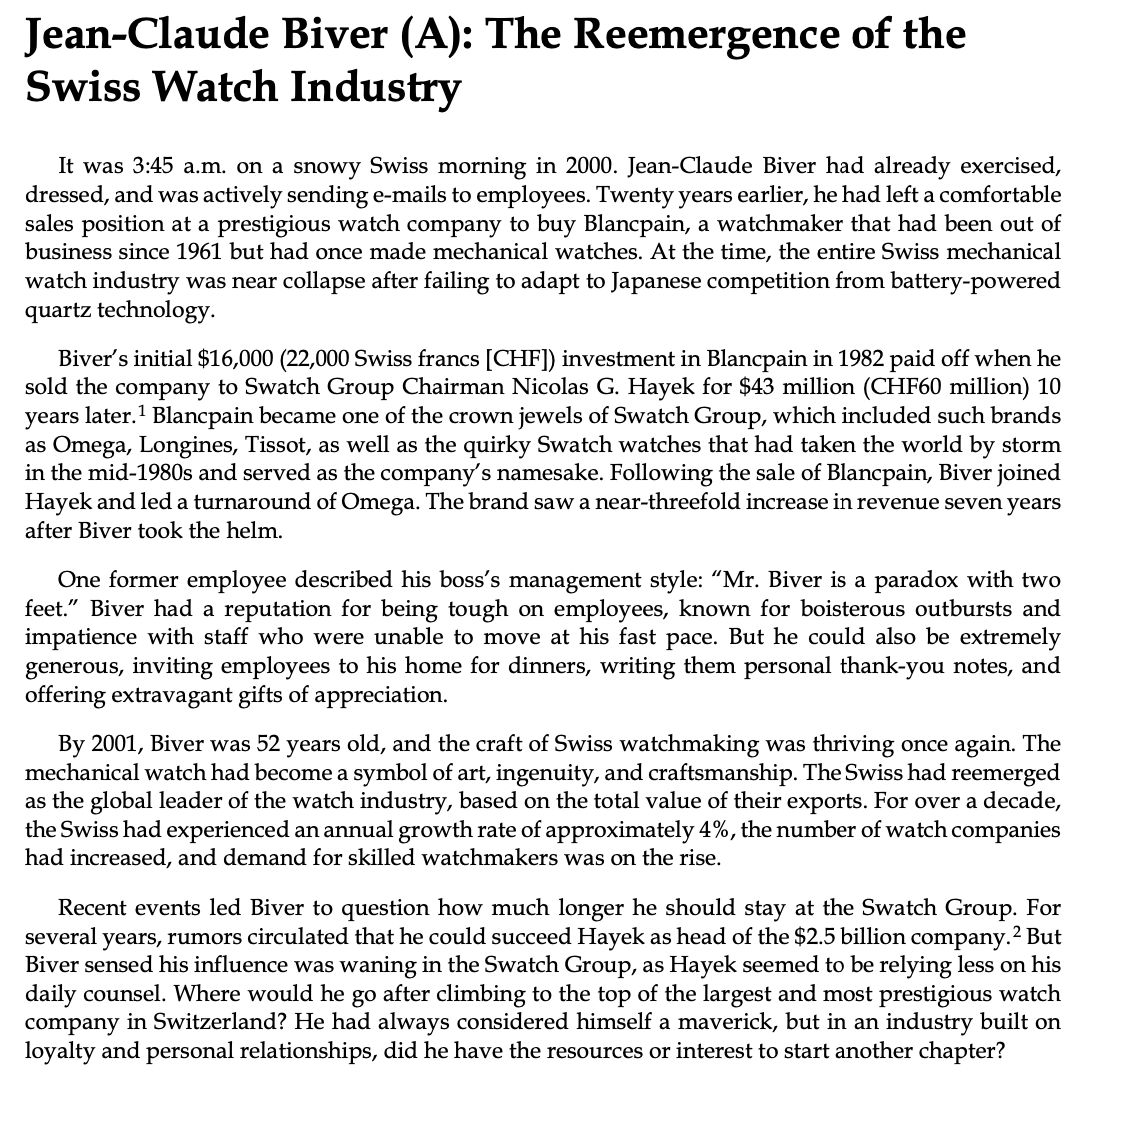 Jean-Claude Biver shows no signs of slowing down despite